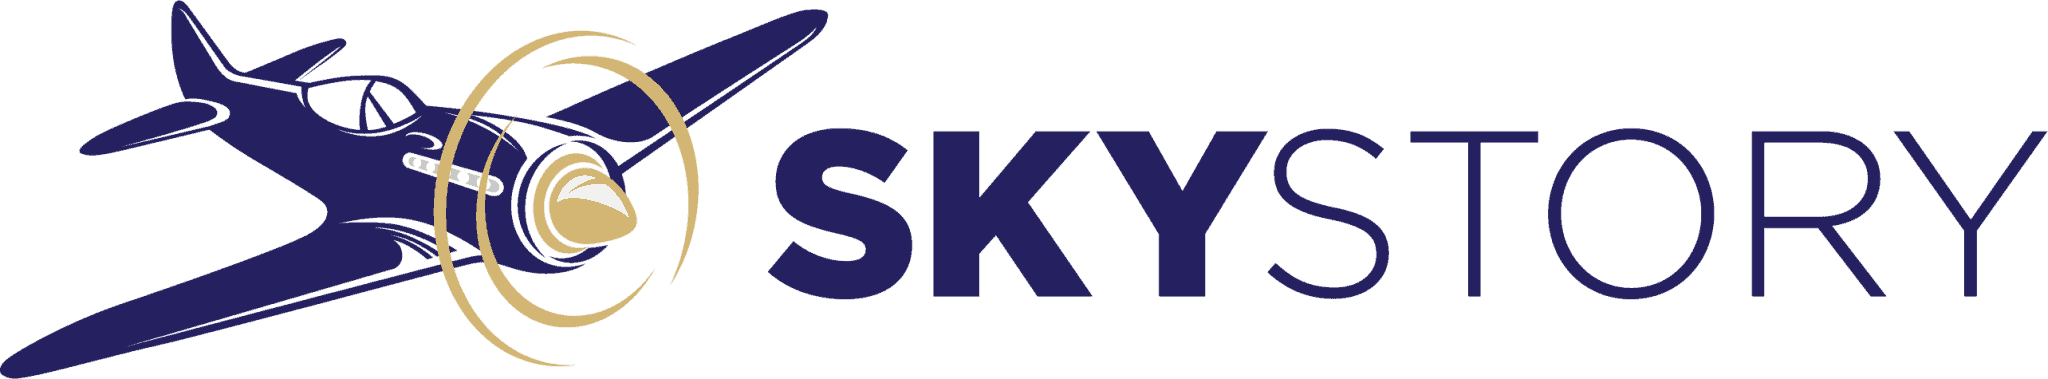 logo skystory